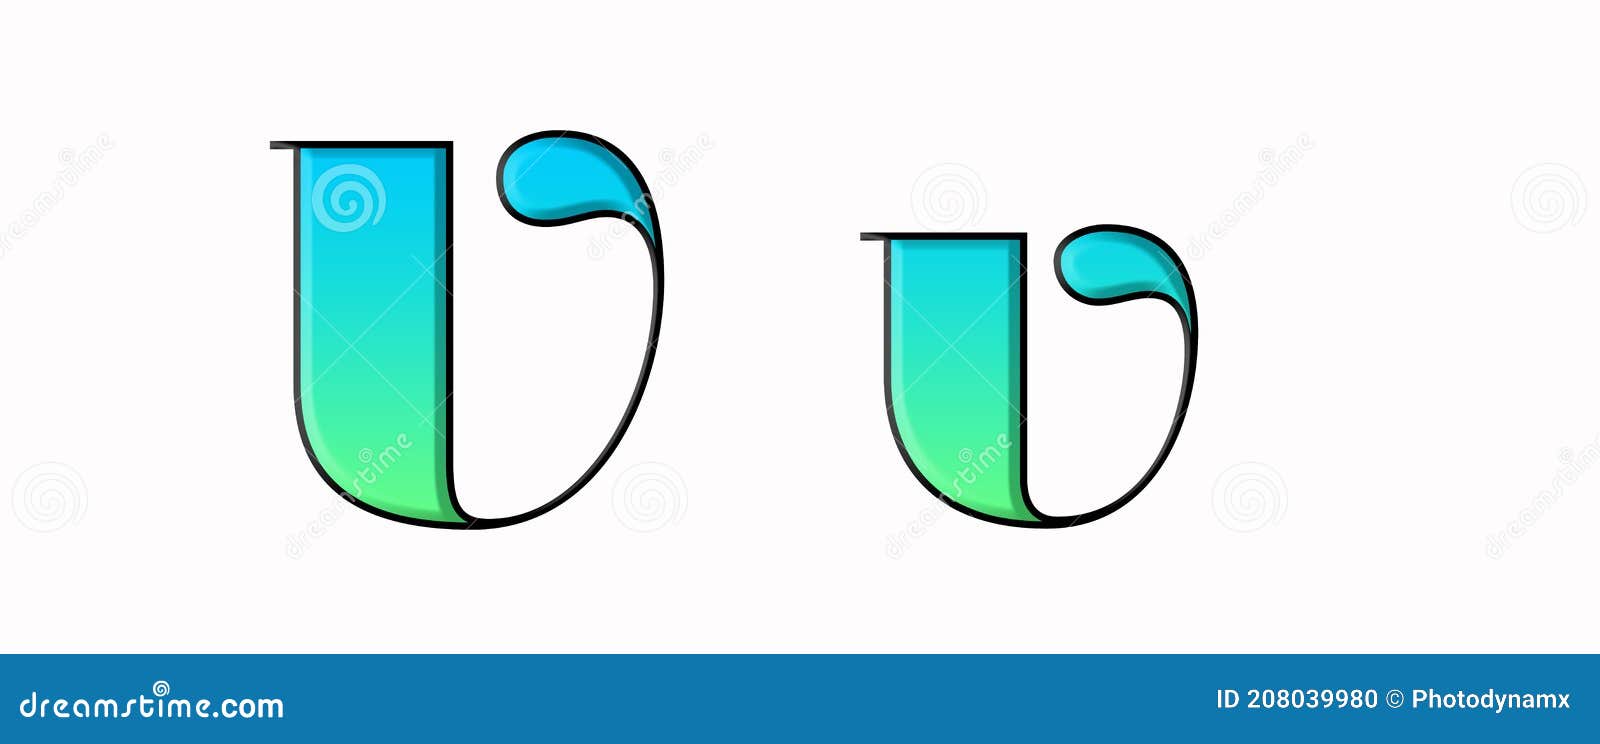 jeanne moderno gradient sans serif alphabet letters calligraphy letter typeface typography unique